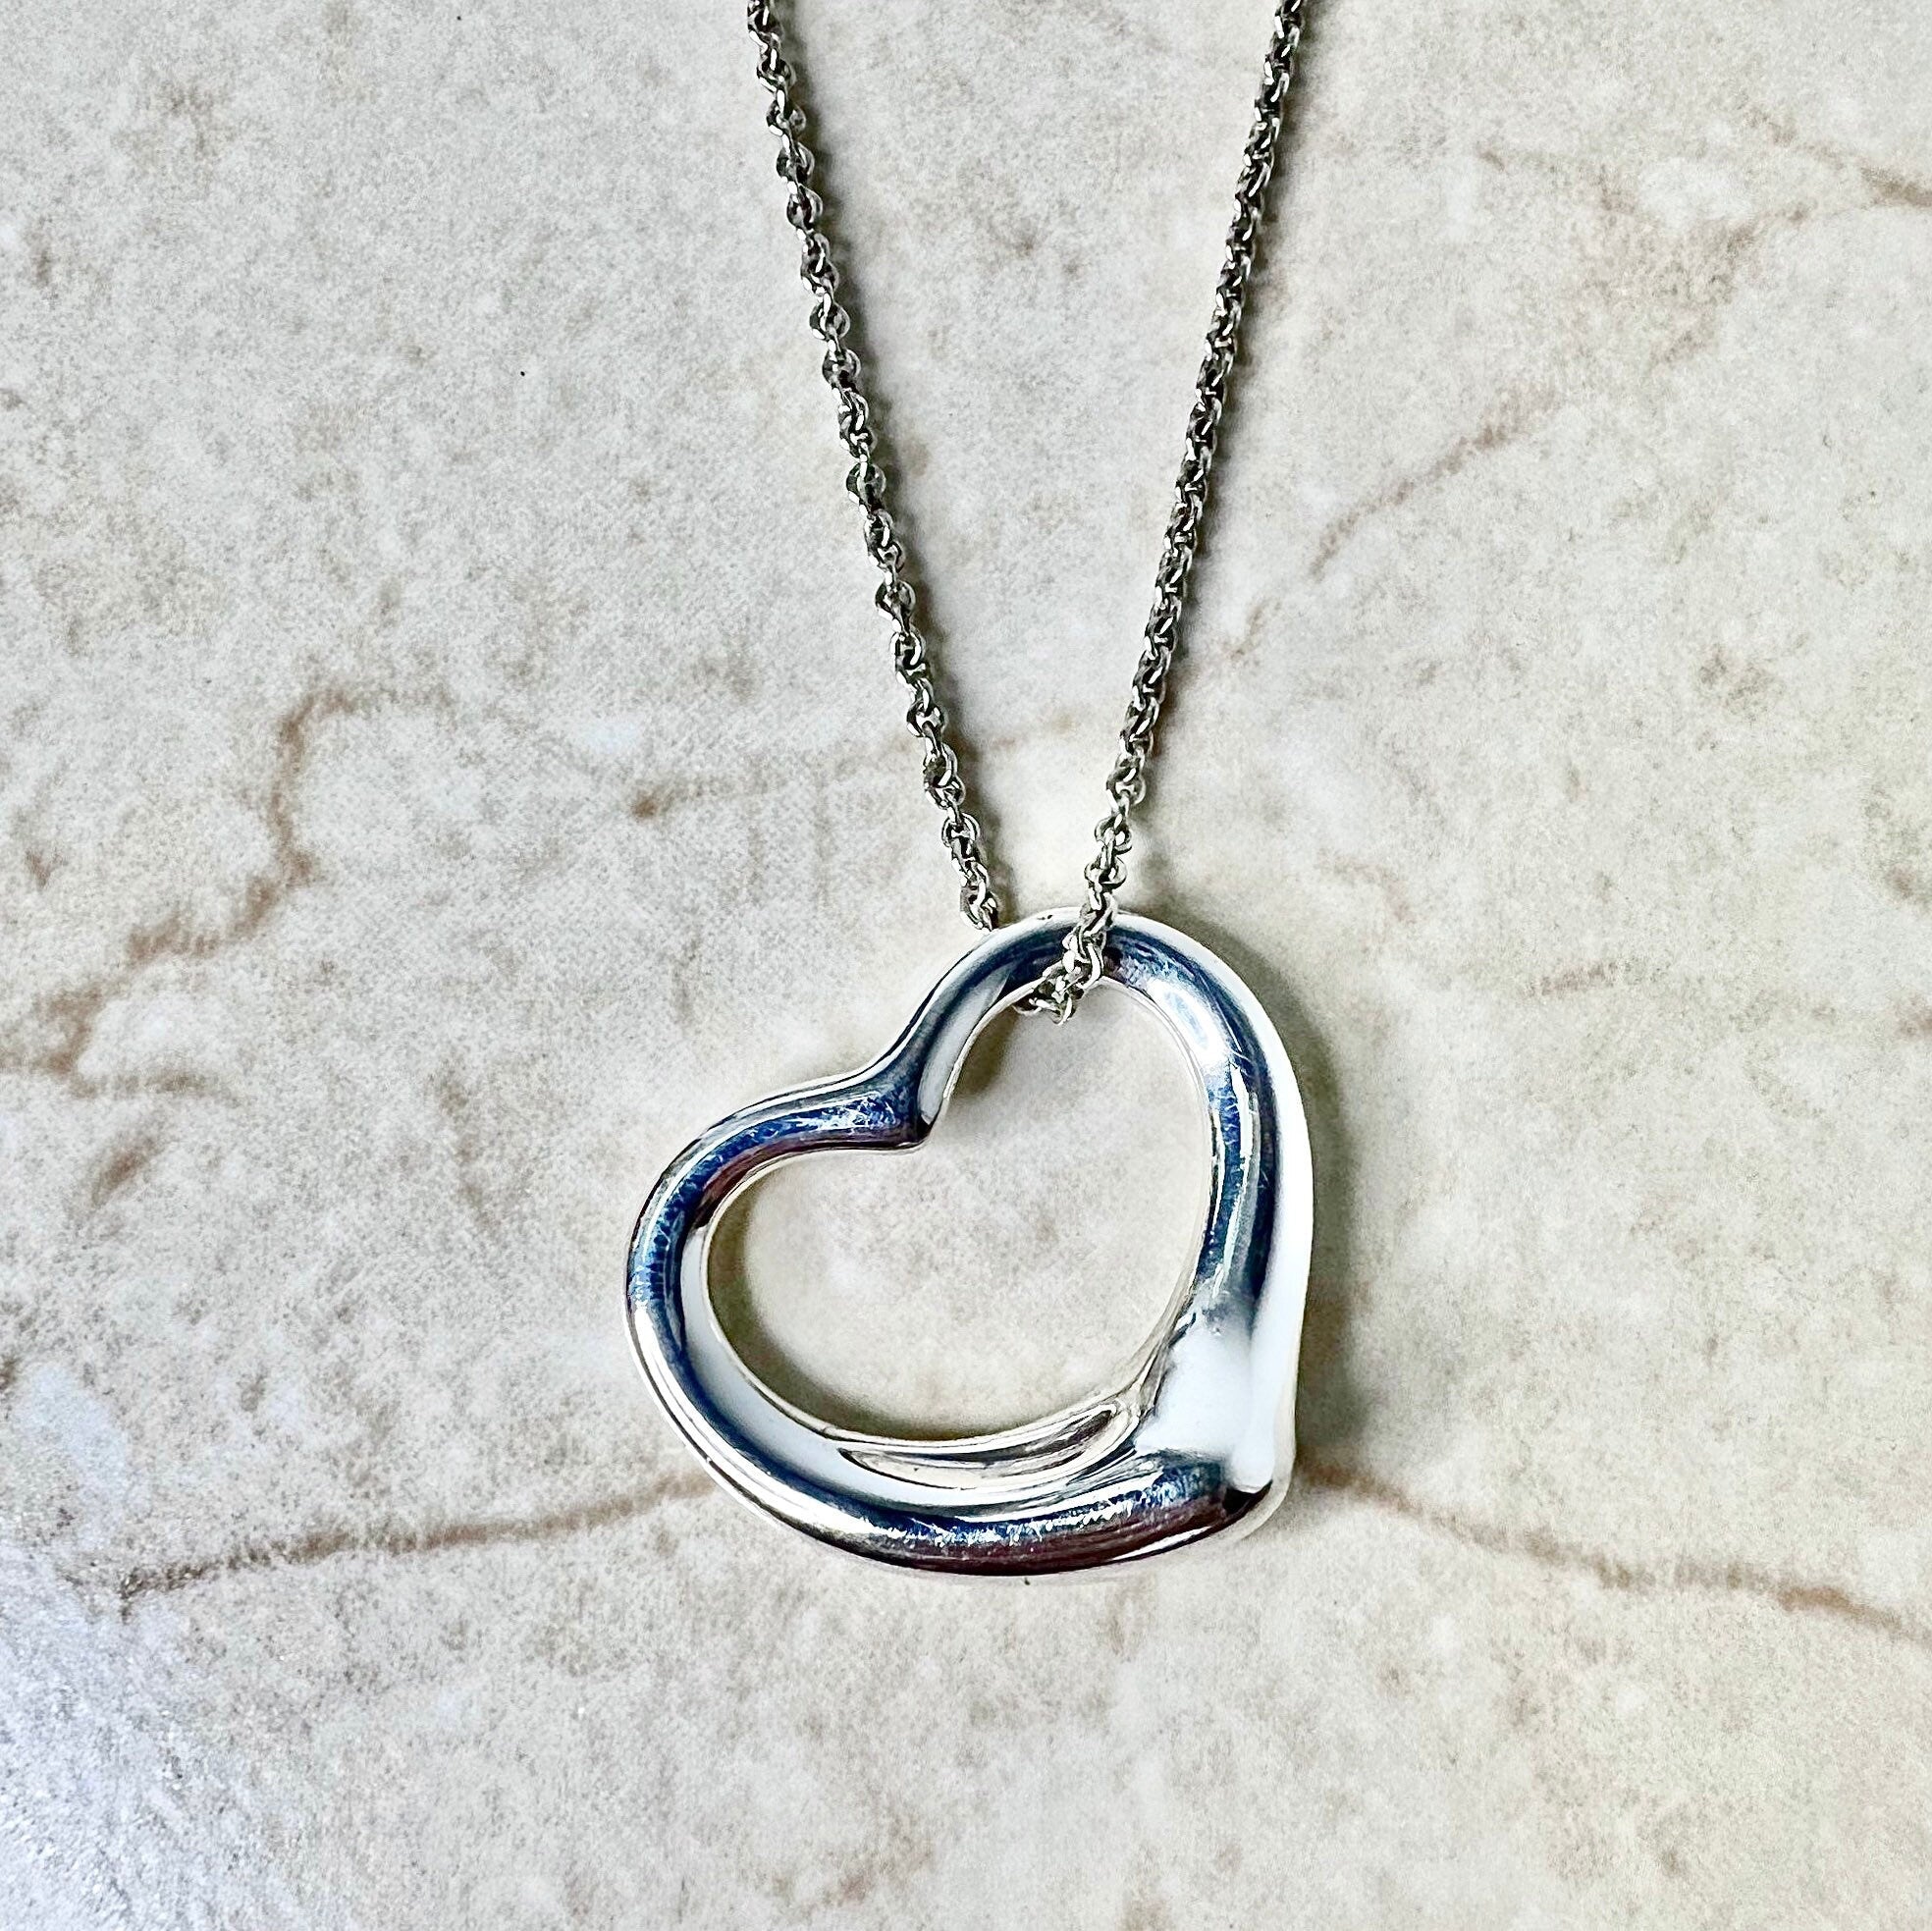 Tiffany & Co Silver Peretti 3 Open Heart Pendant Necklace Charm Chain Gift  Pouch